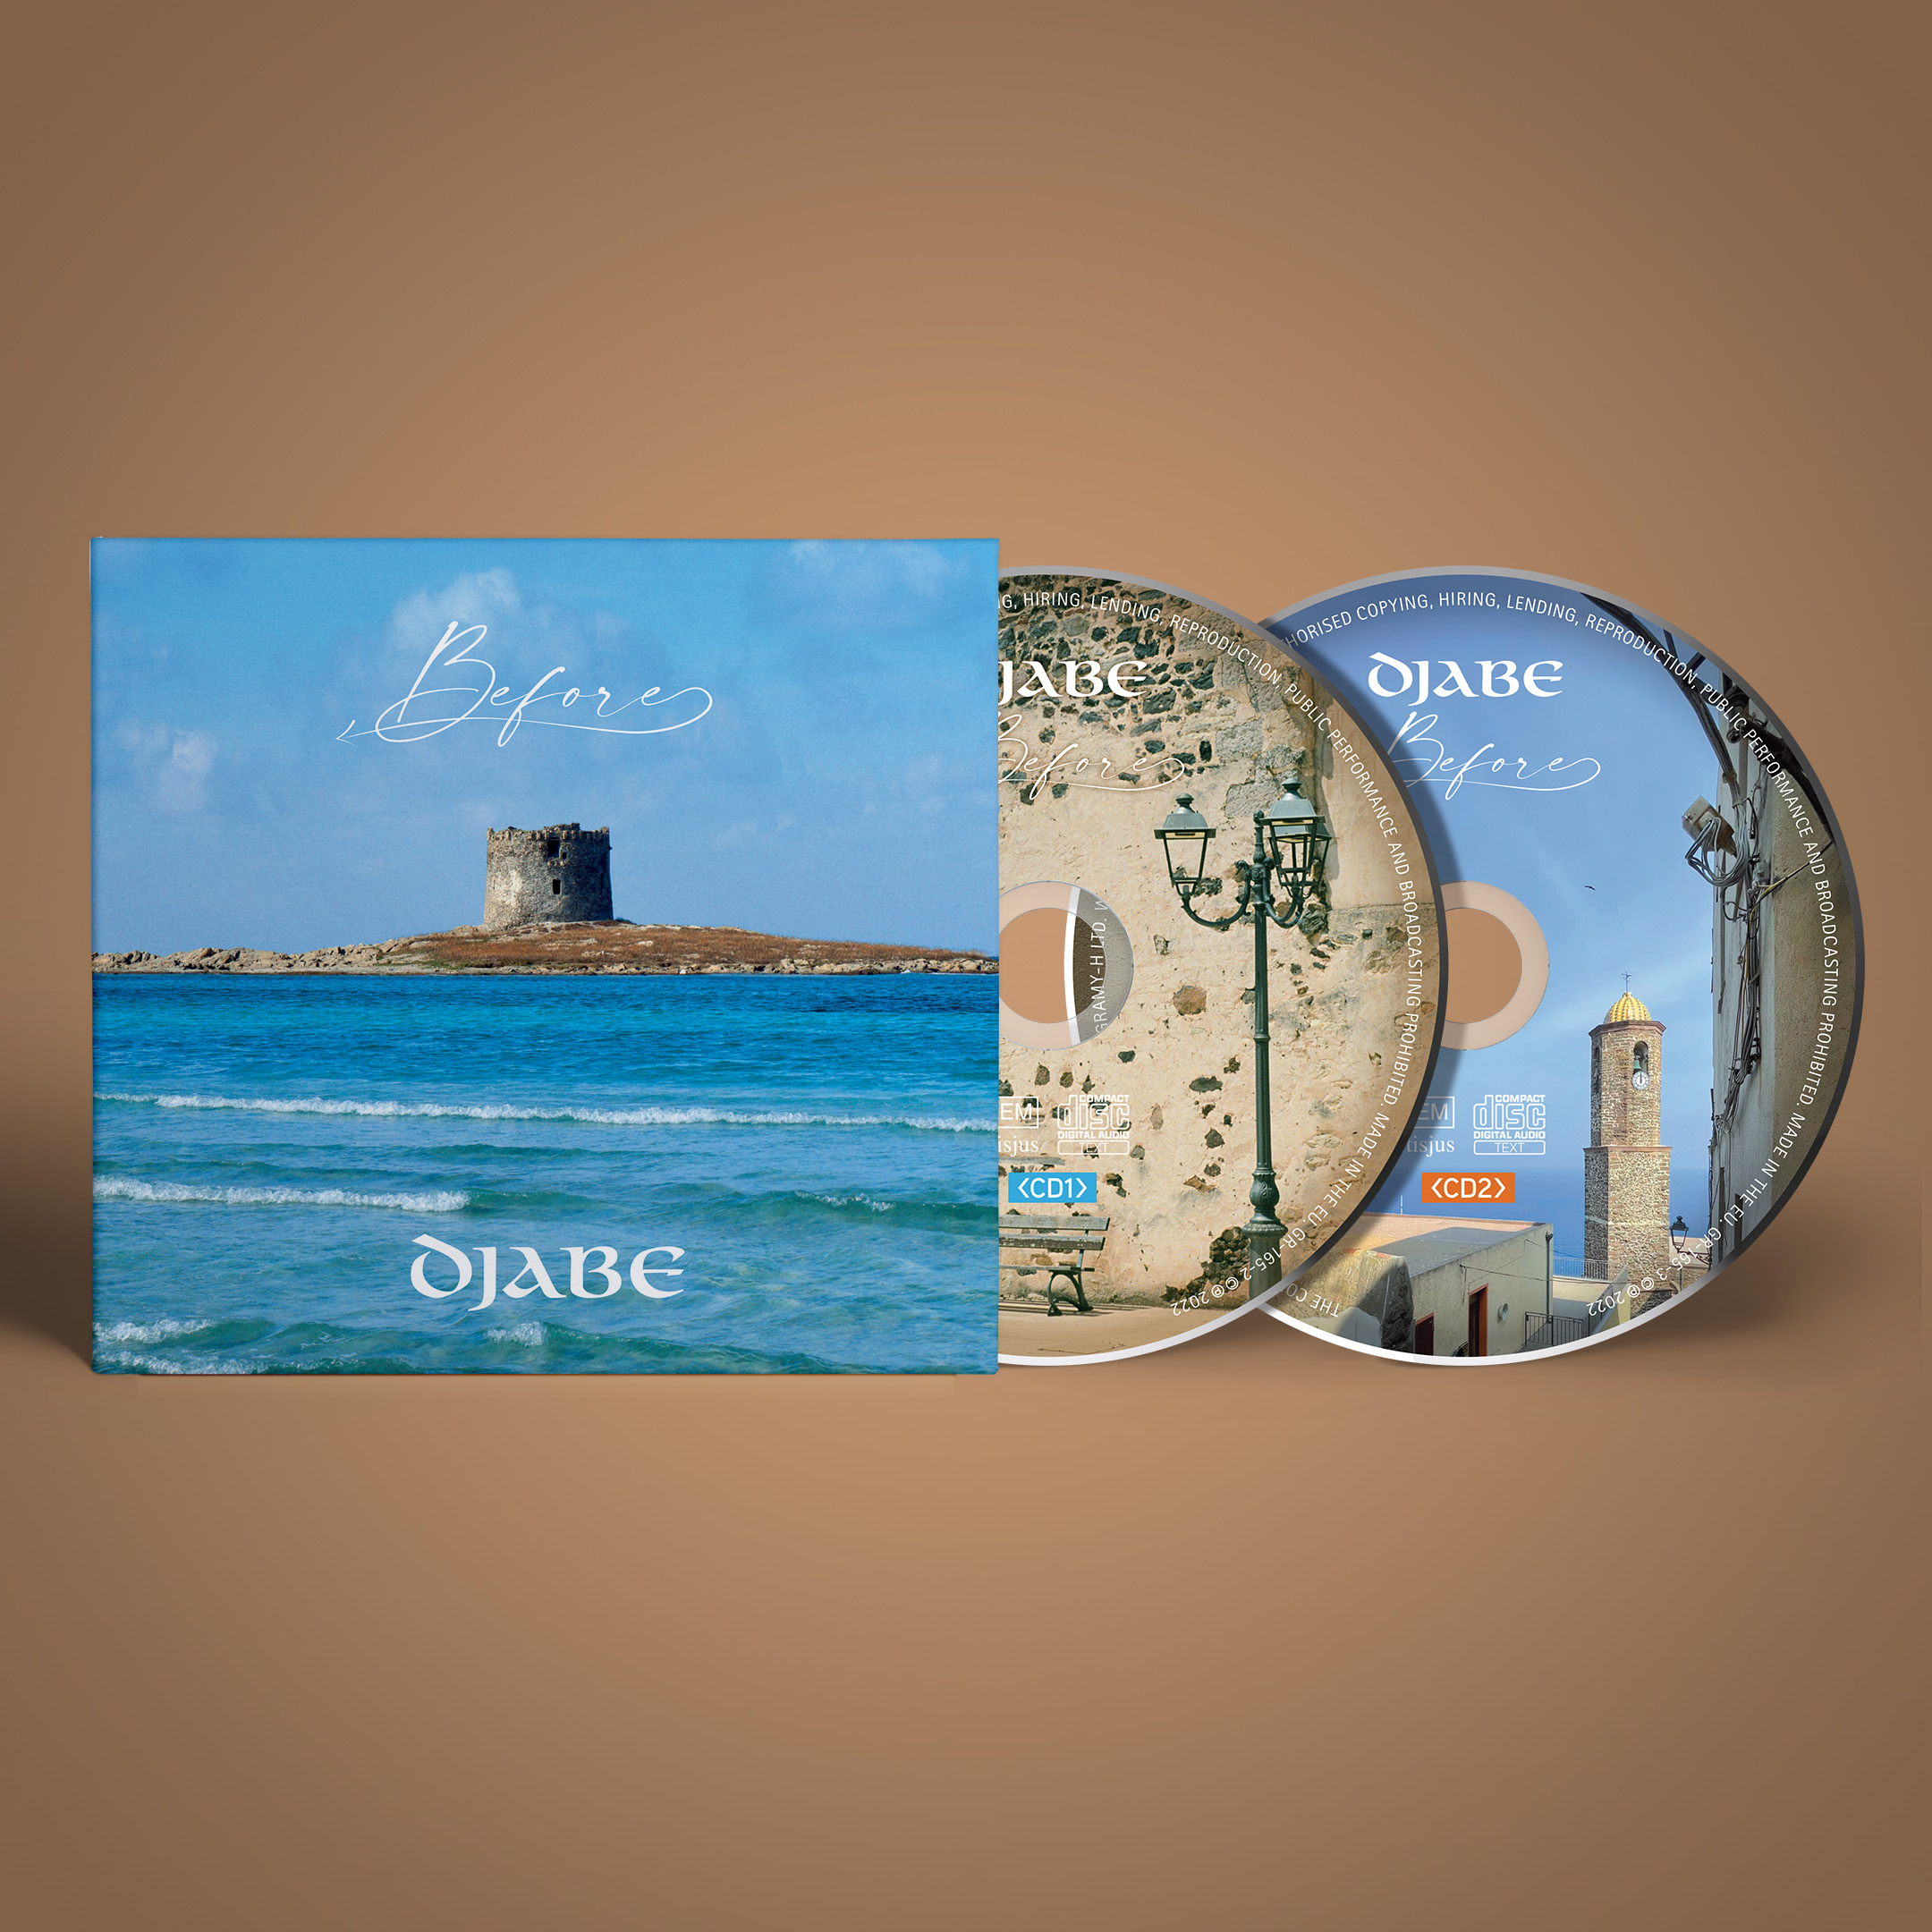 New Djabe studio album released 9th December 2022!